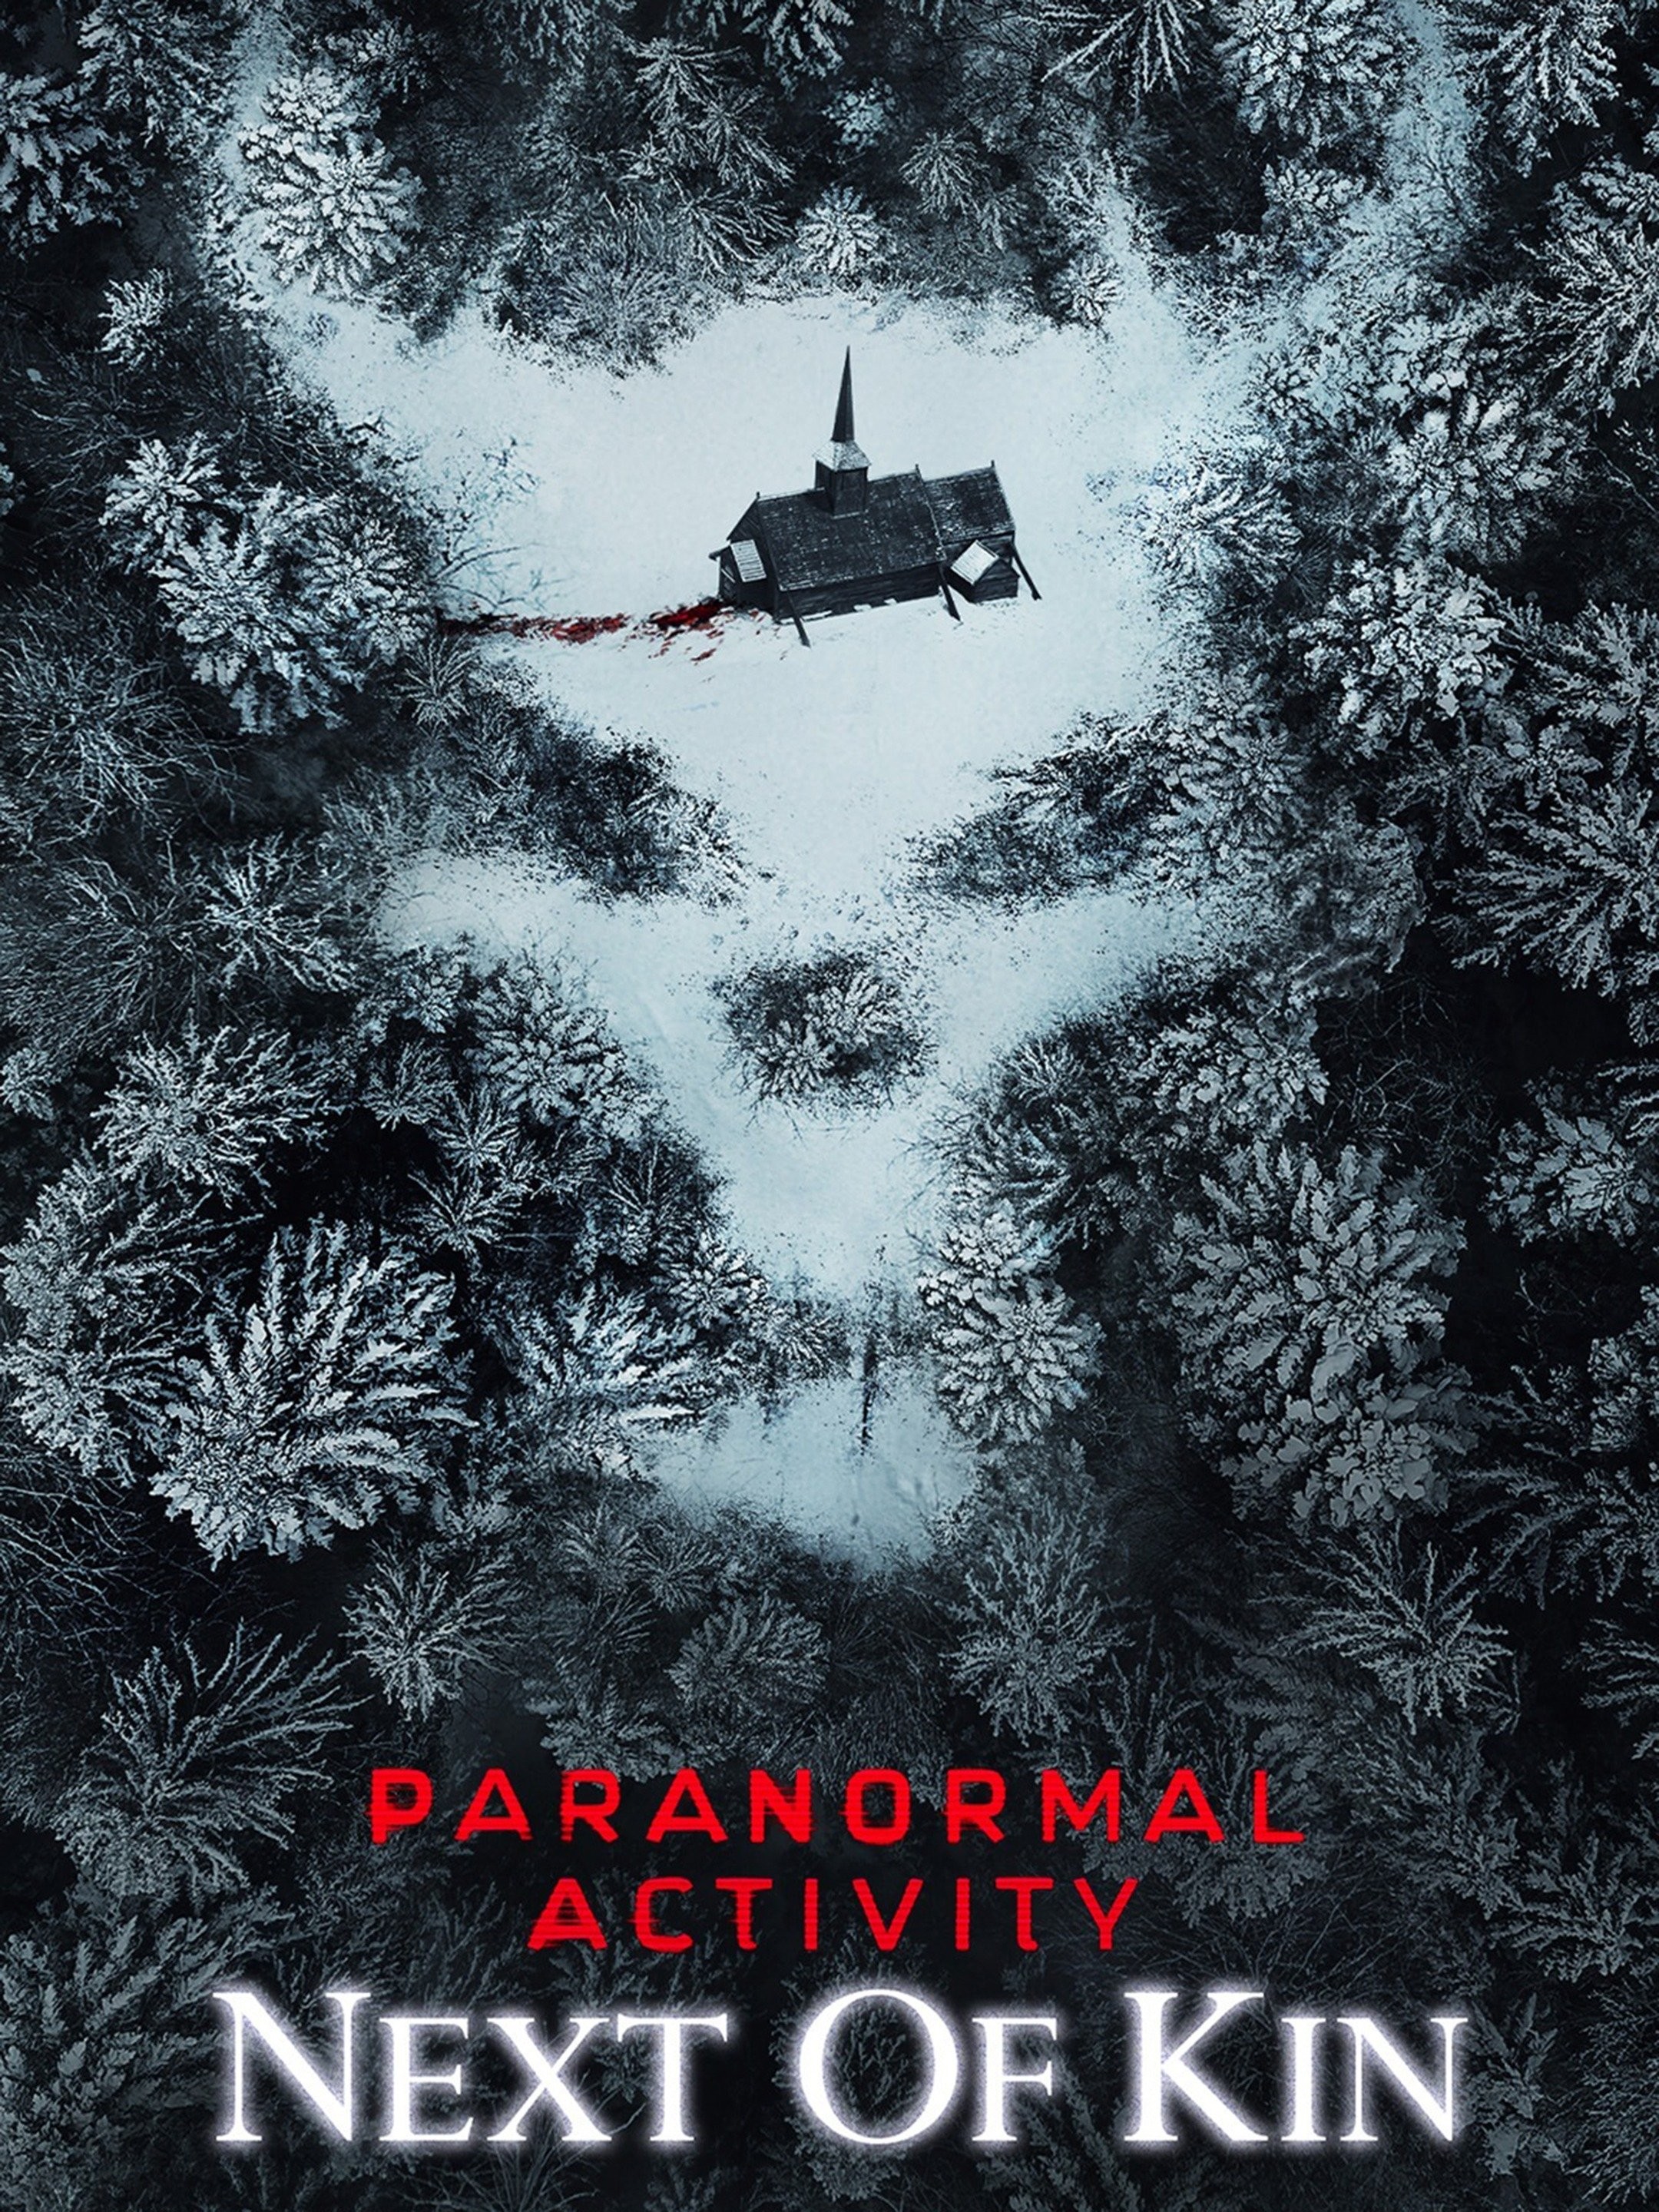 Ordem Paranormal (TV Series 2020– ) - Episode list - IMDb